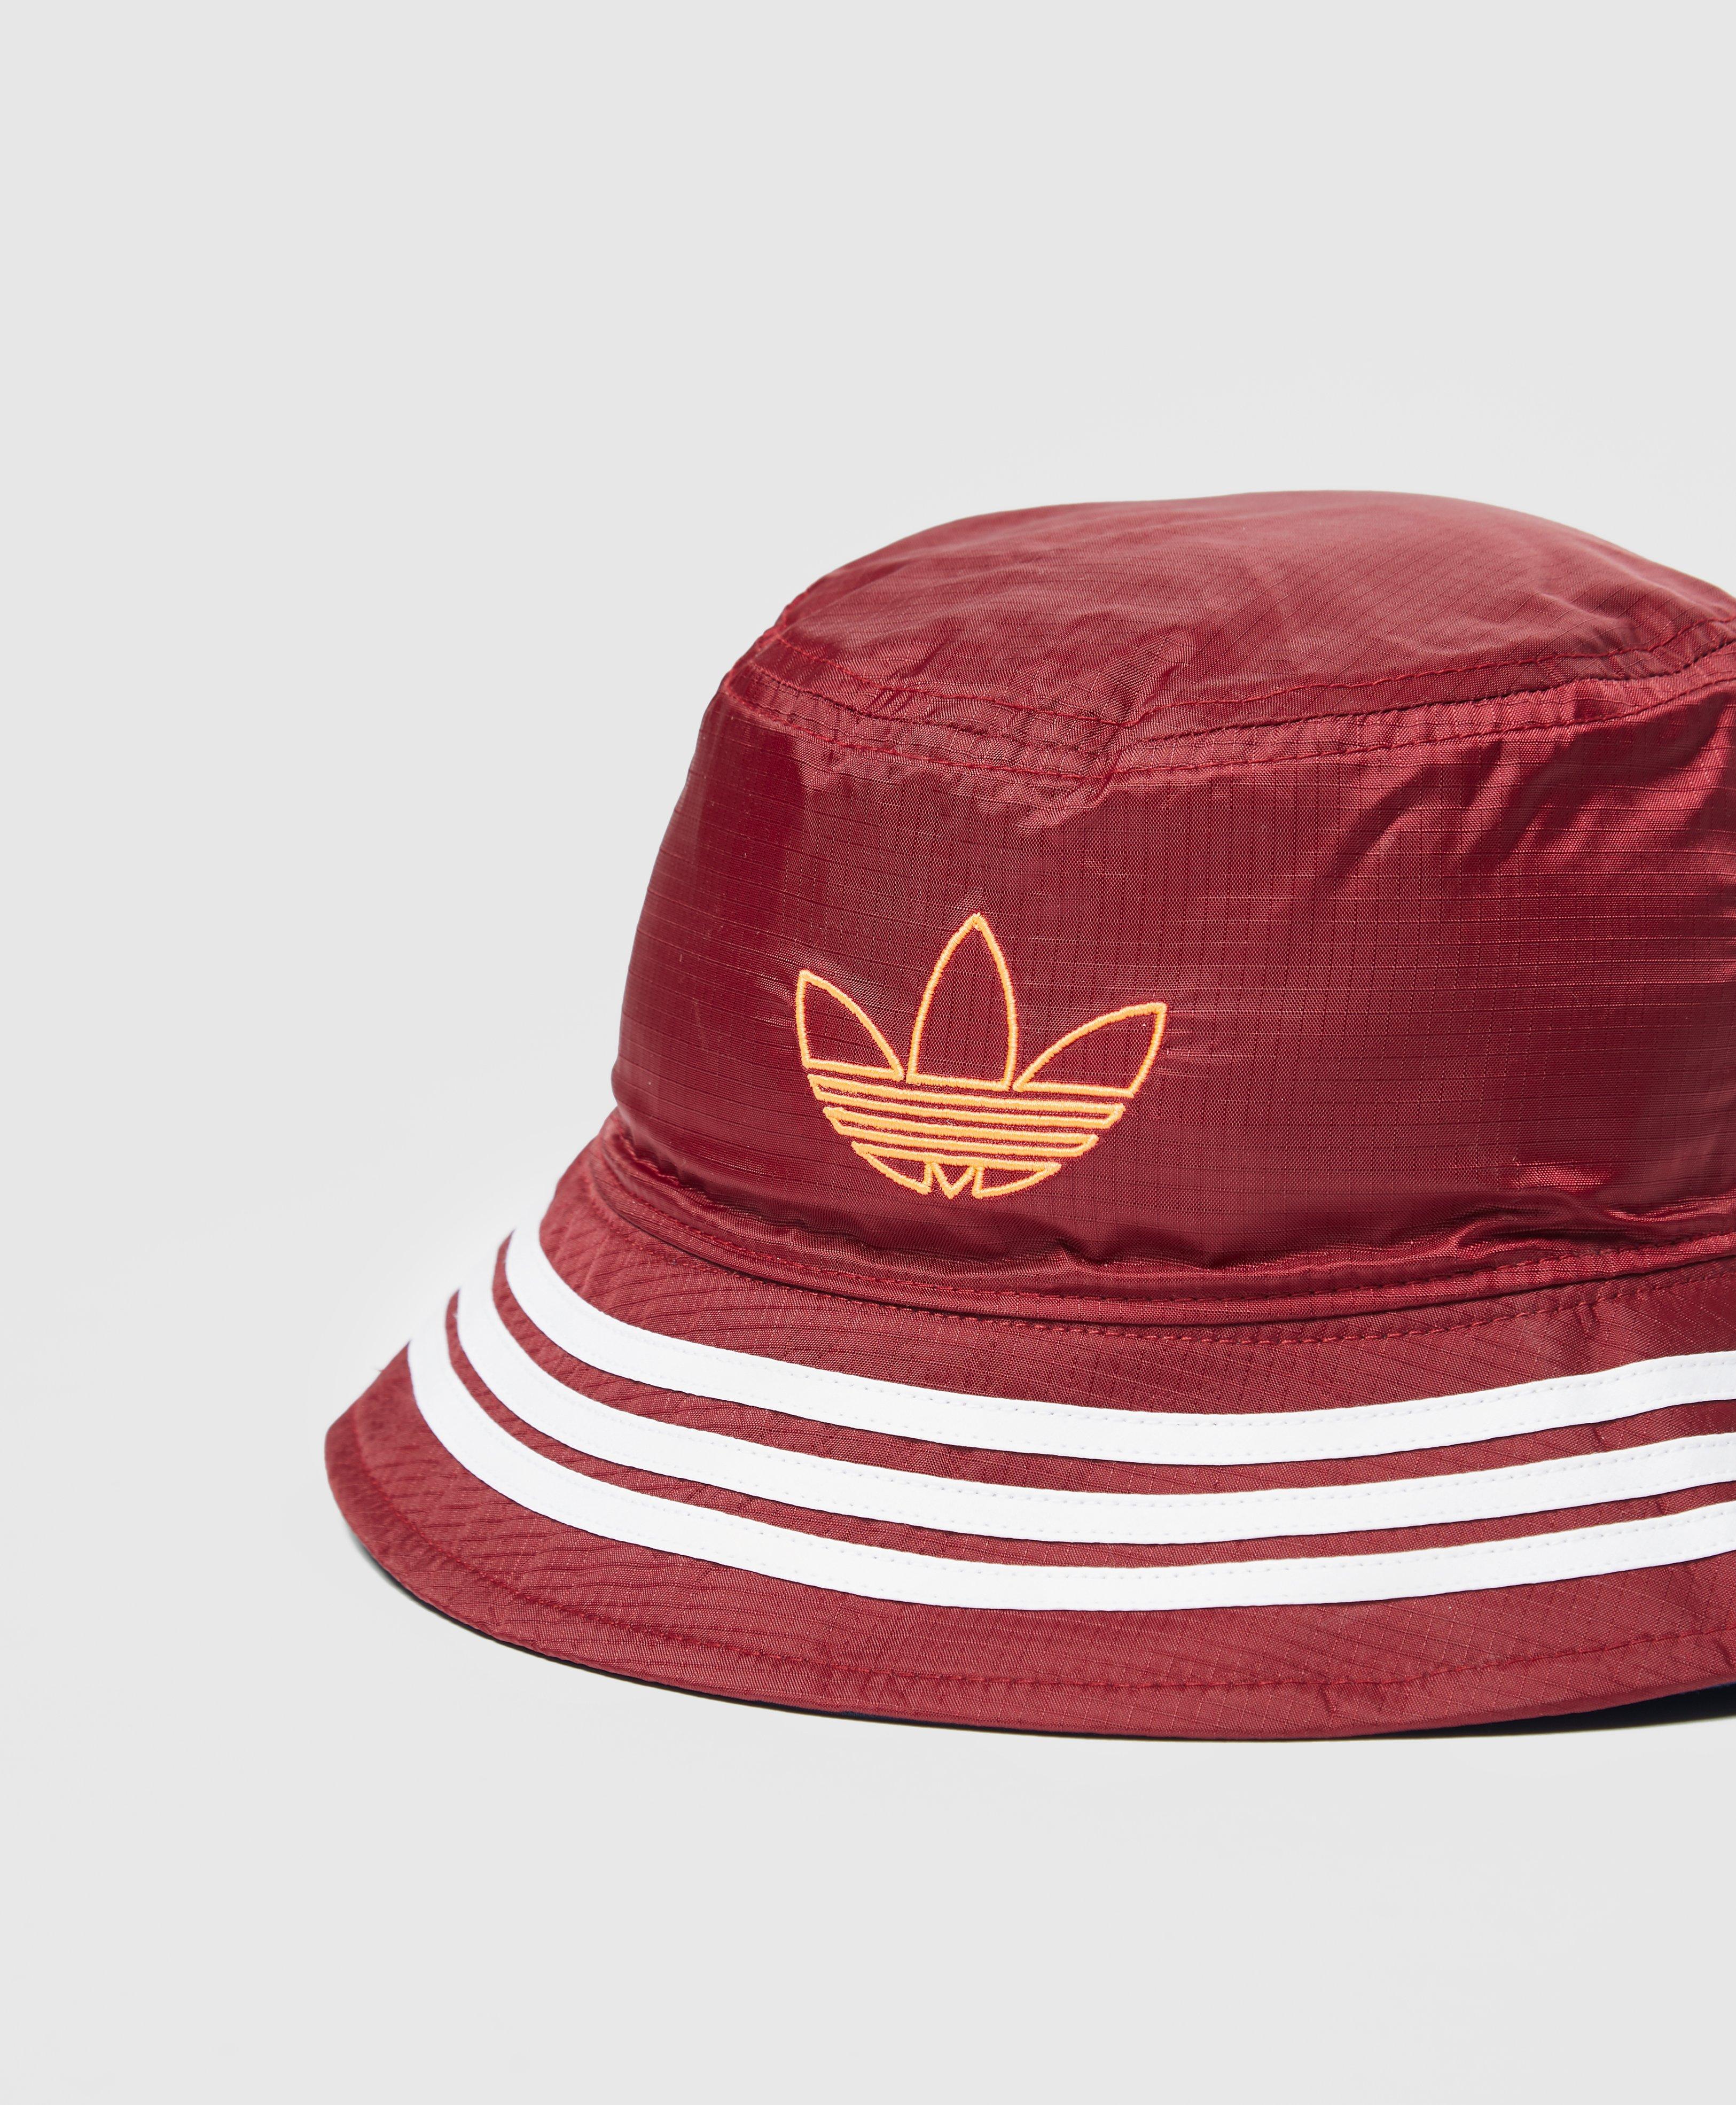 adidas Cotton Sprt Bucket Hat in Red for Men - Lyst